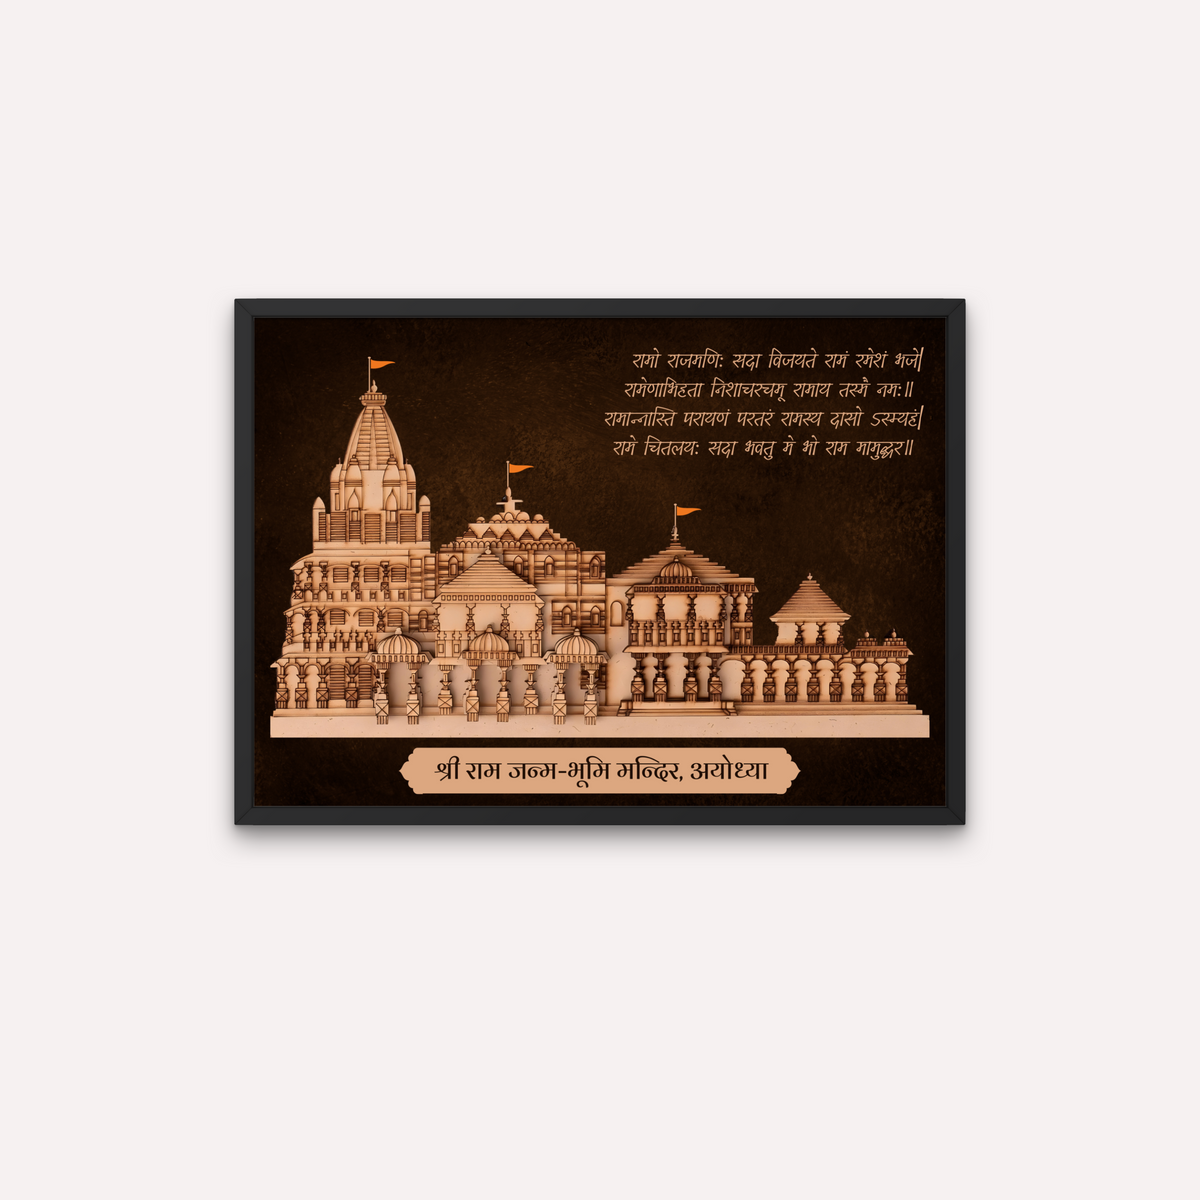 Ayodhya Ram Mandir Photo Frame - Inauguration Edition